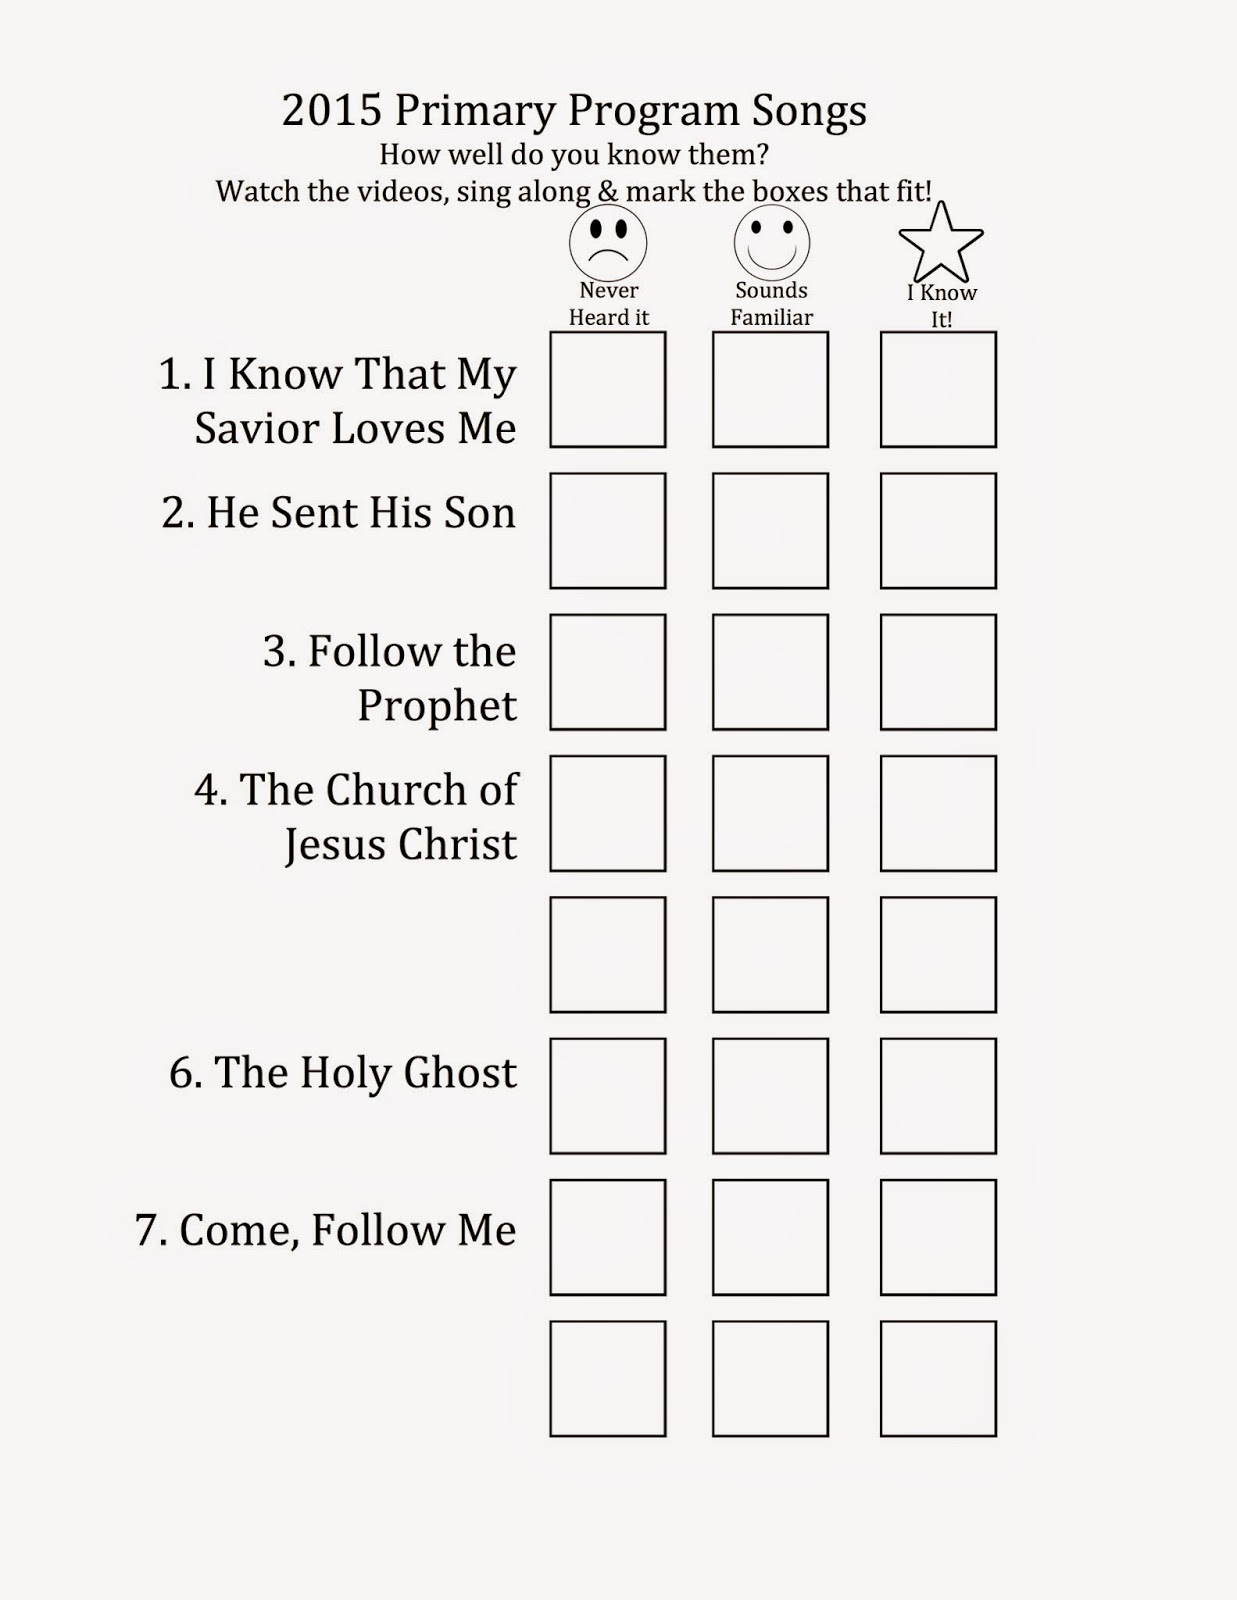 I Belong To The Church Of Jesus Christ Flip Chart